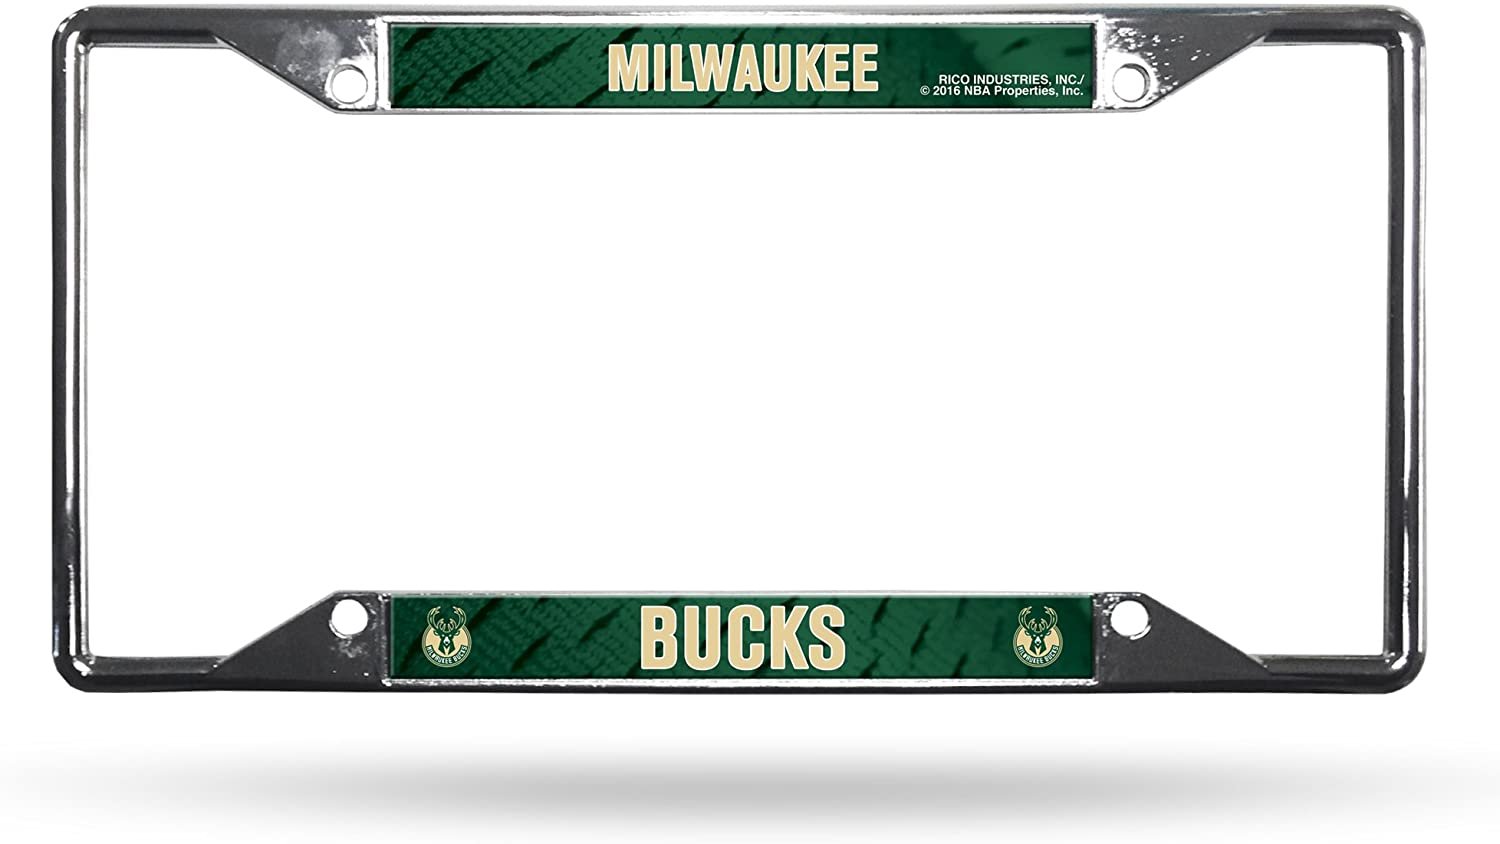 Milwaukee Bucks Premium Metal License Plate Frame Chrome Tag Cover, EZ View, 6x12 Inch